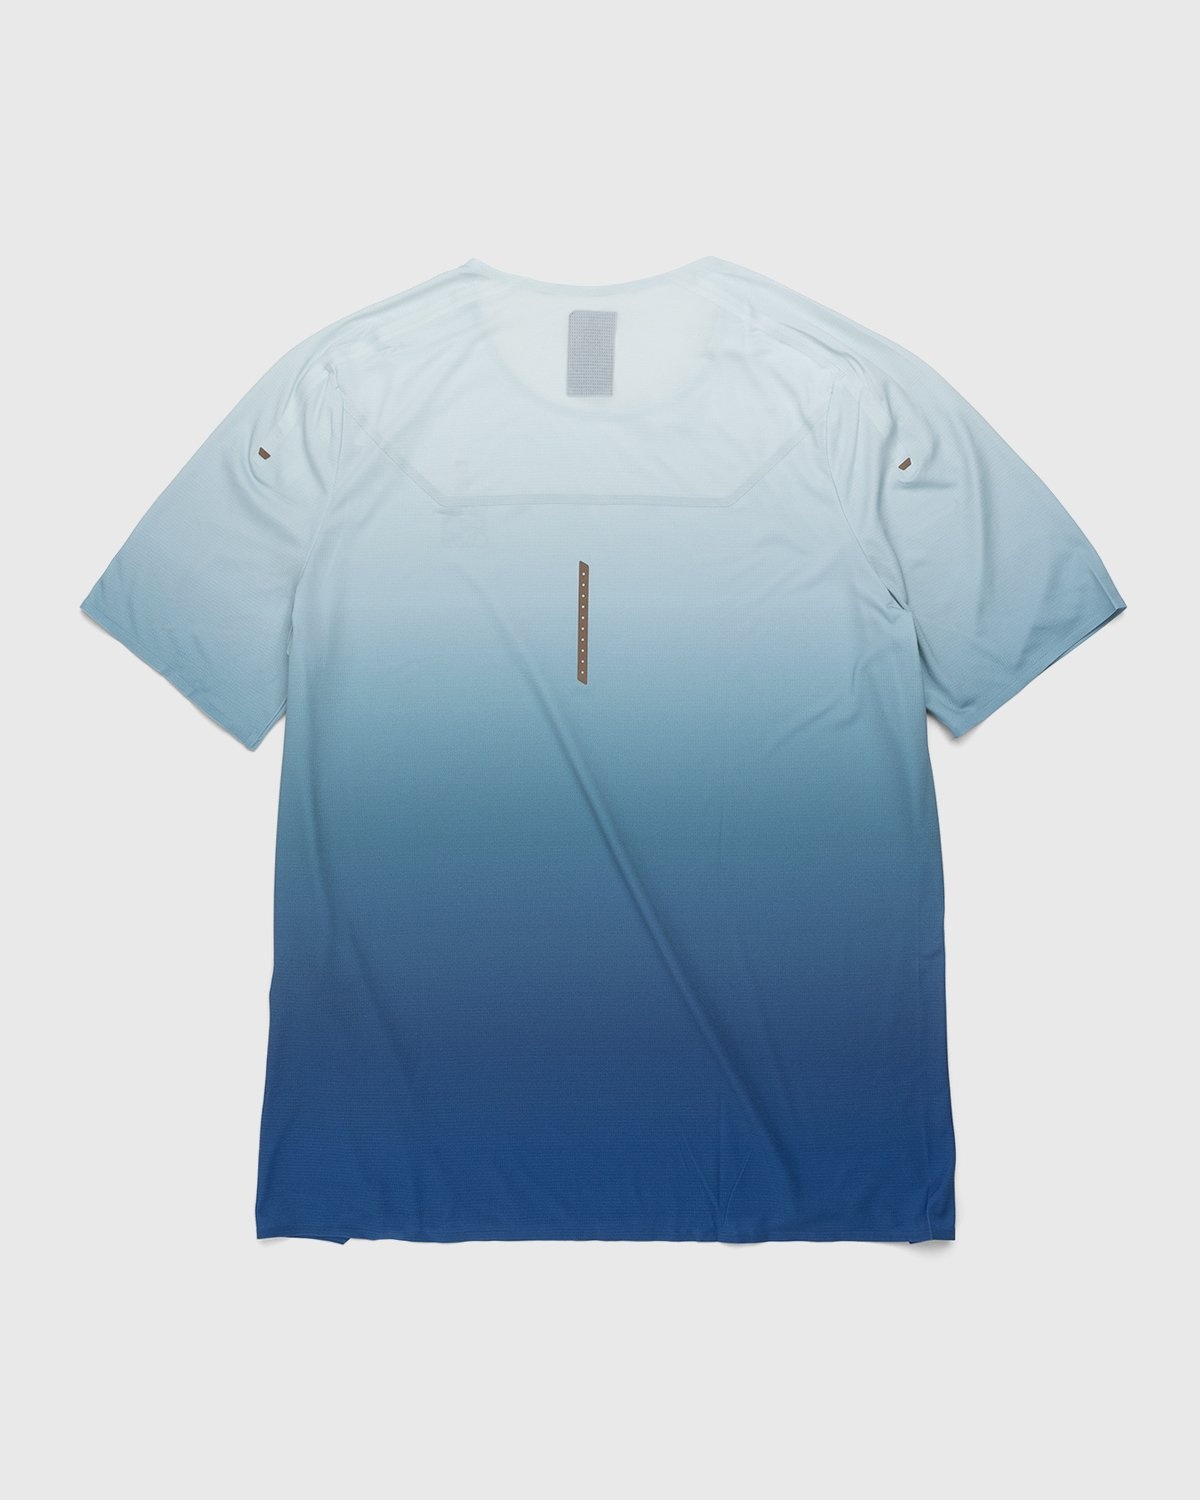 Loewe x On – Women's Performance T-Shirt Gradient Grey - Tops - Blue - Image 2